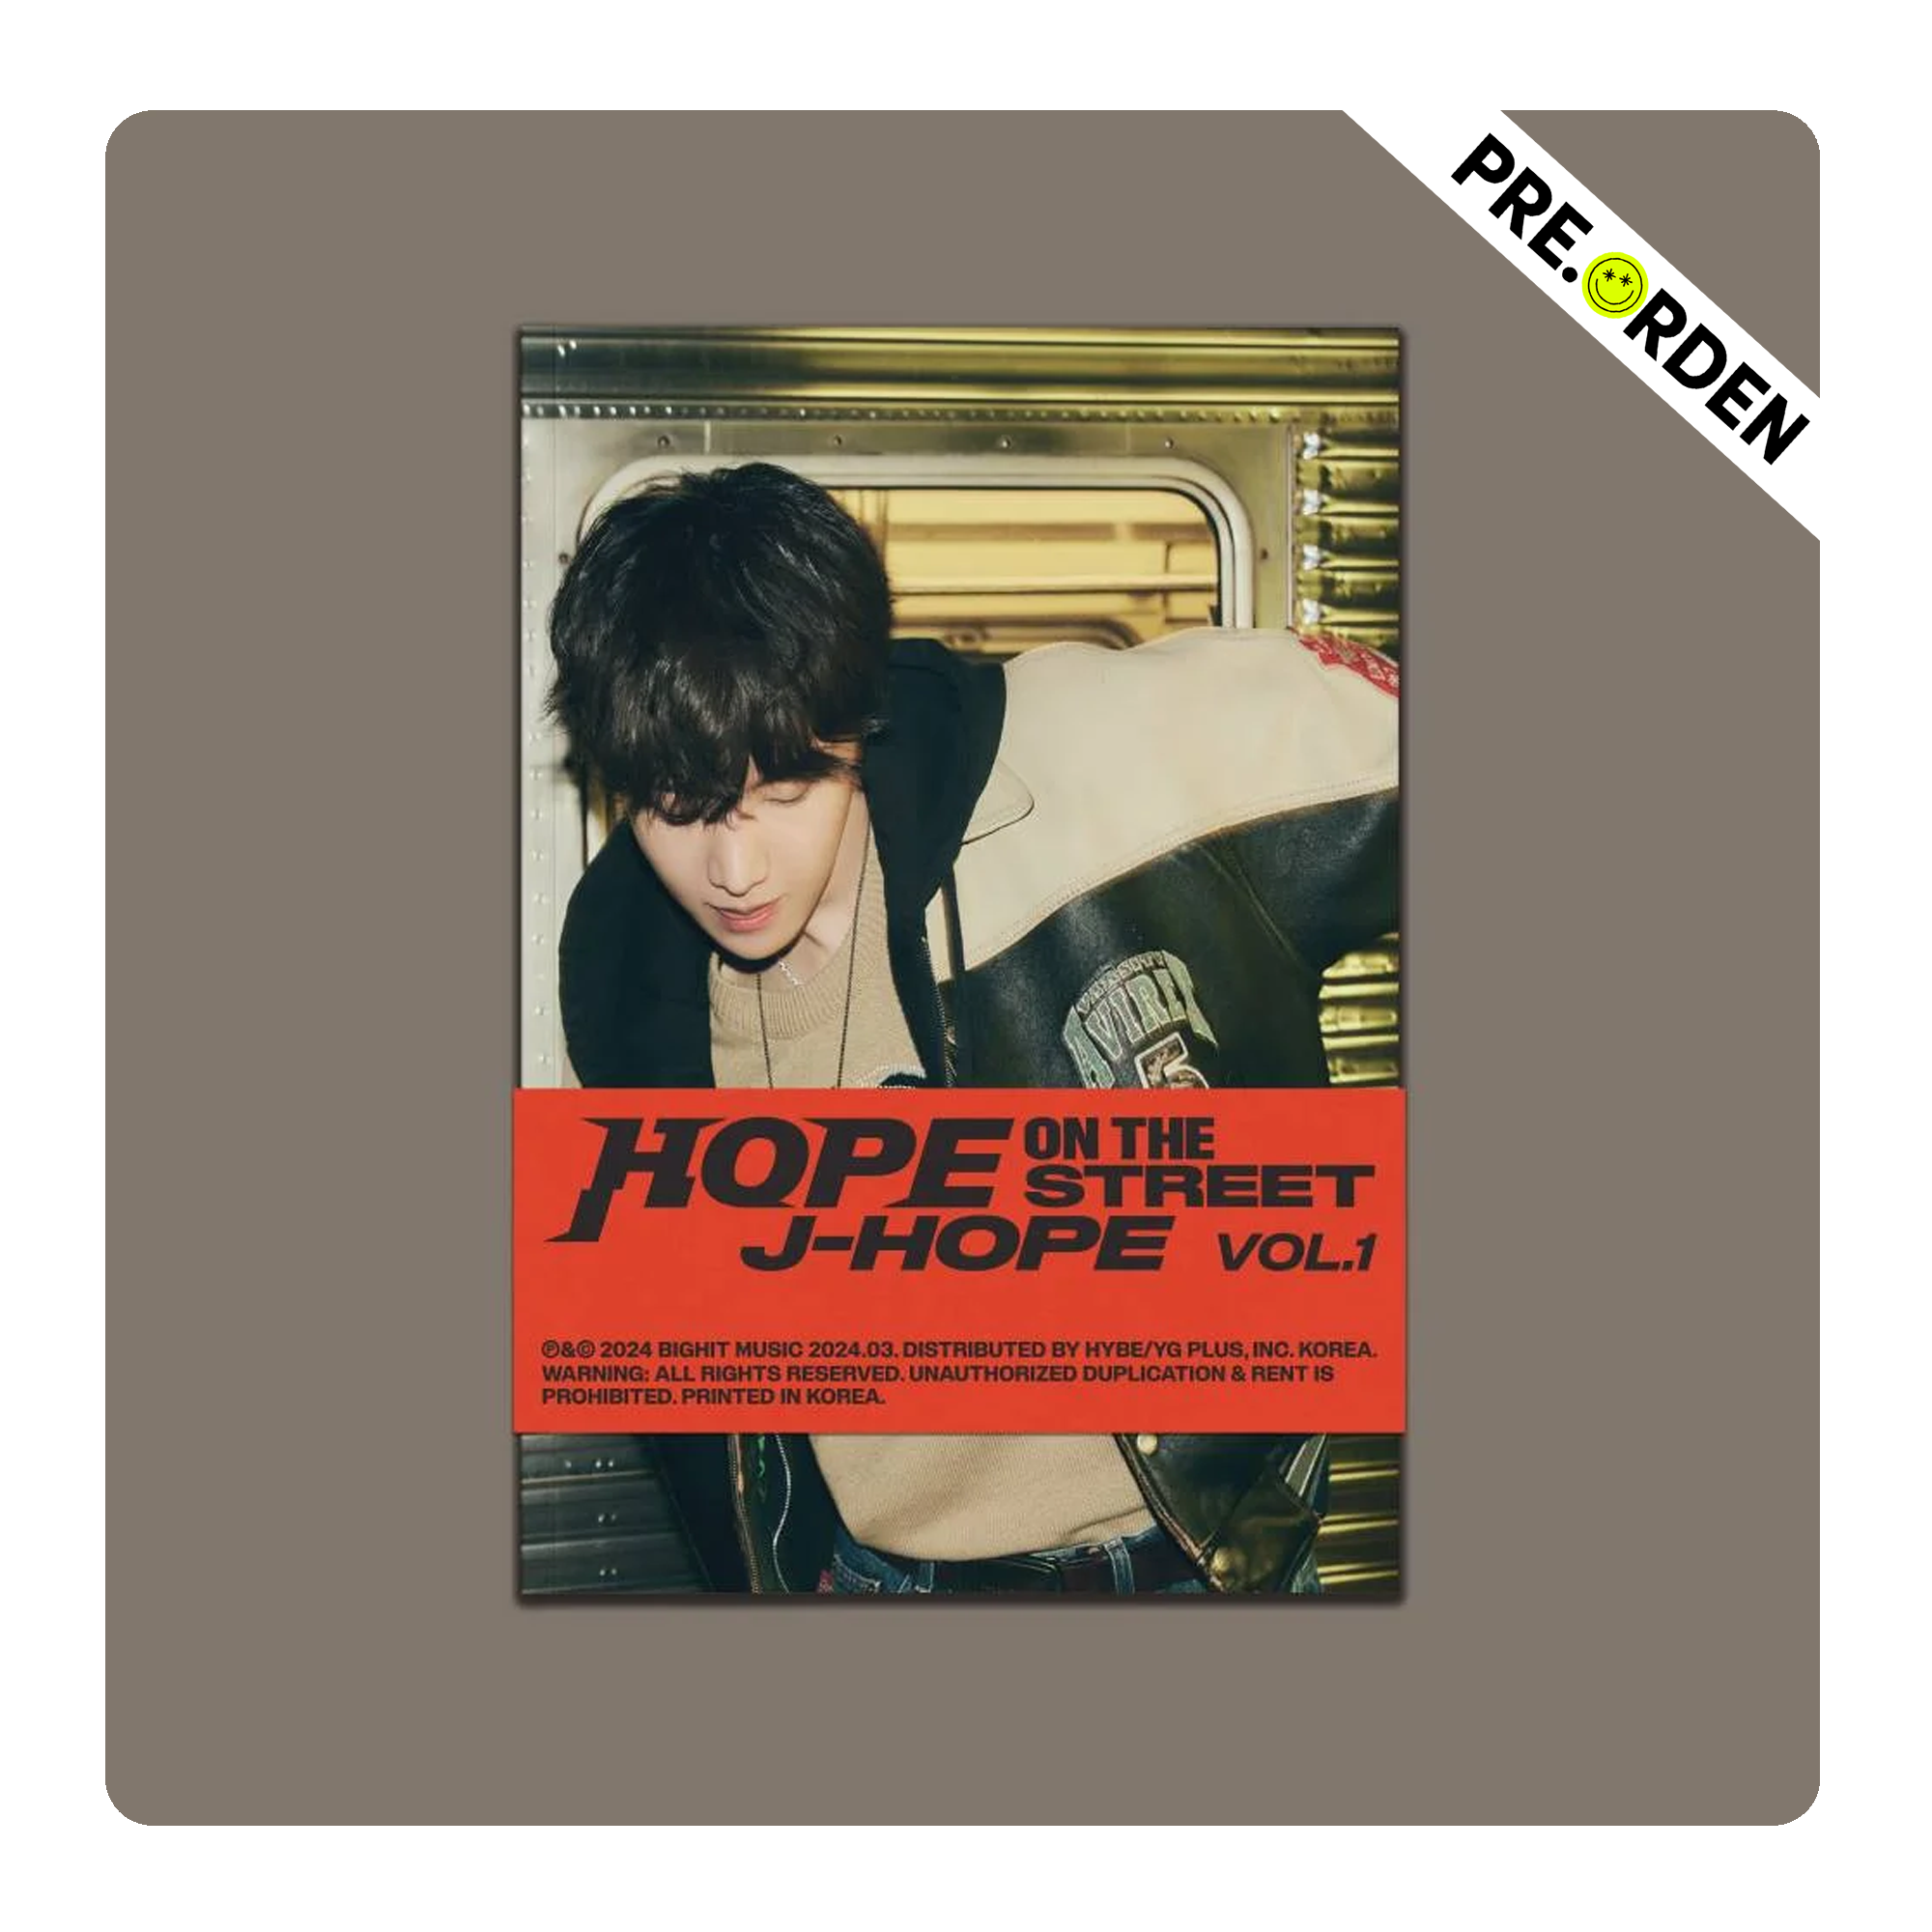 BTS : J-hope - Hope on The Street Vol.1 (Weverse album)